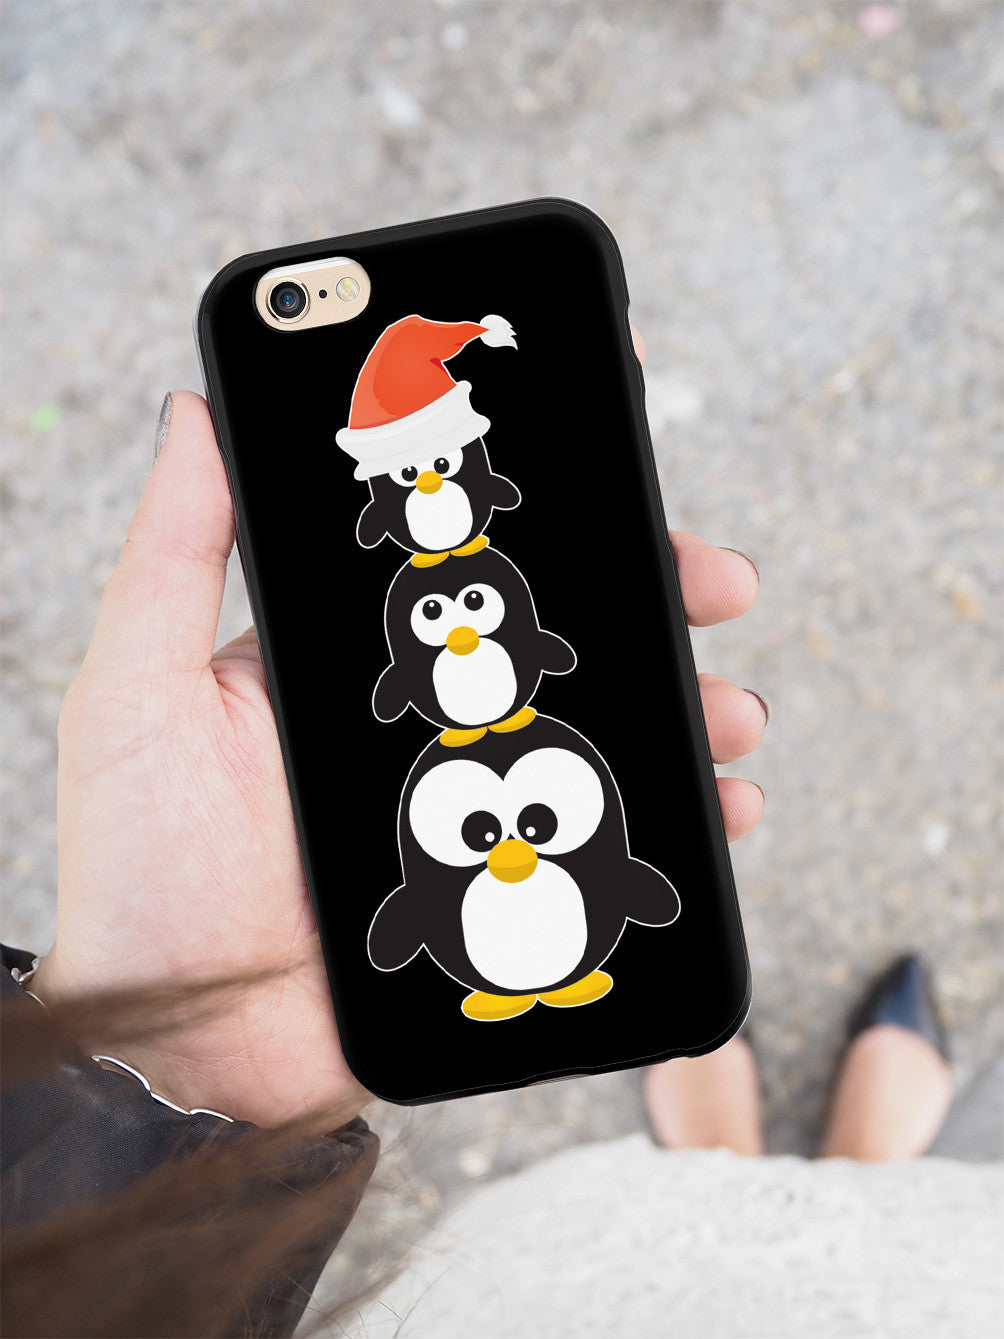 Christmas Penguin Trio - Black Case